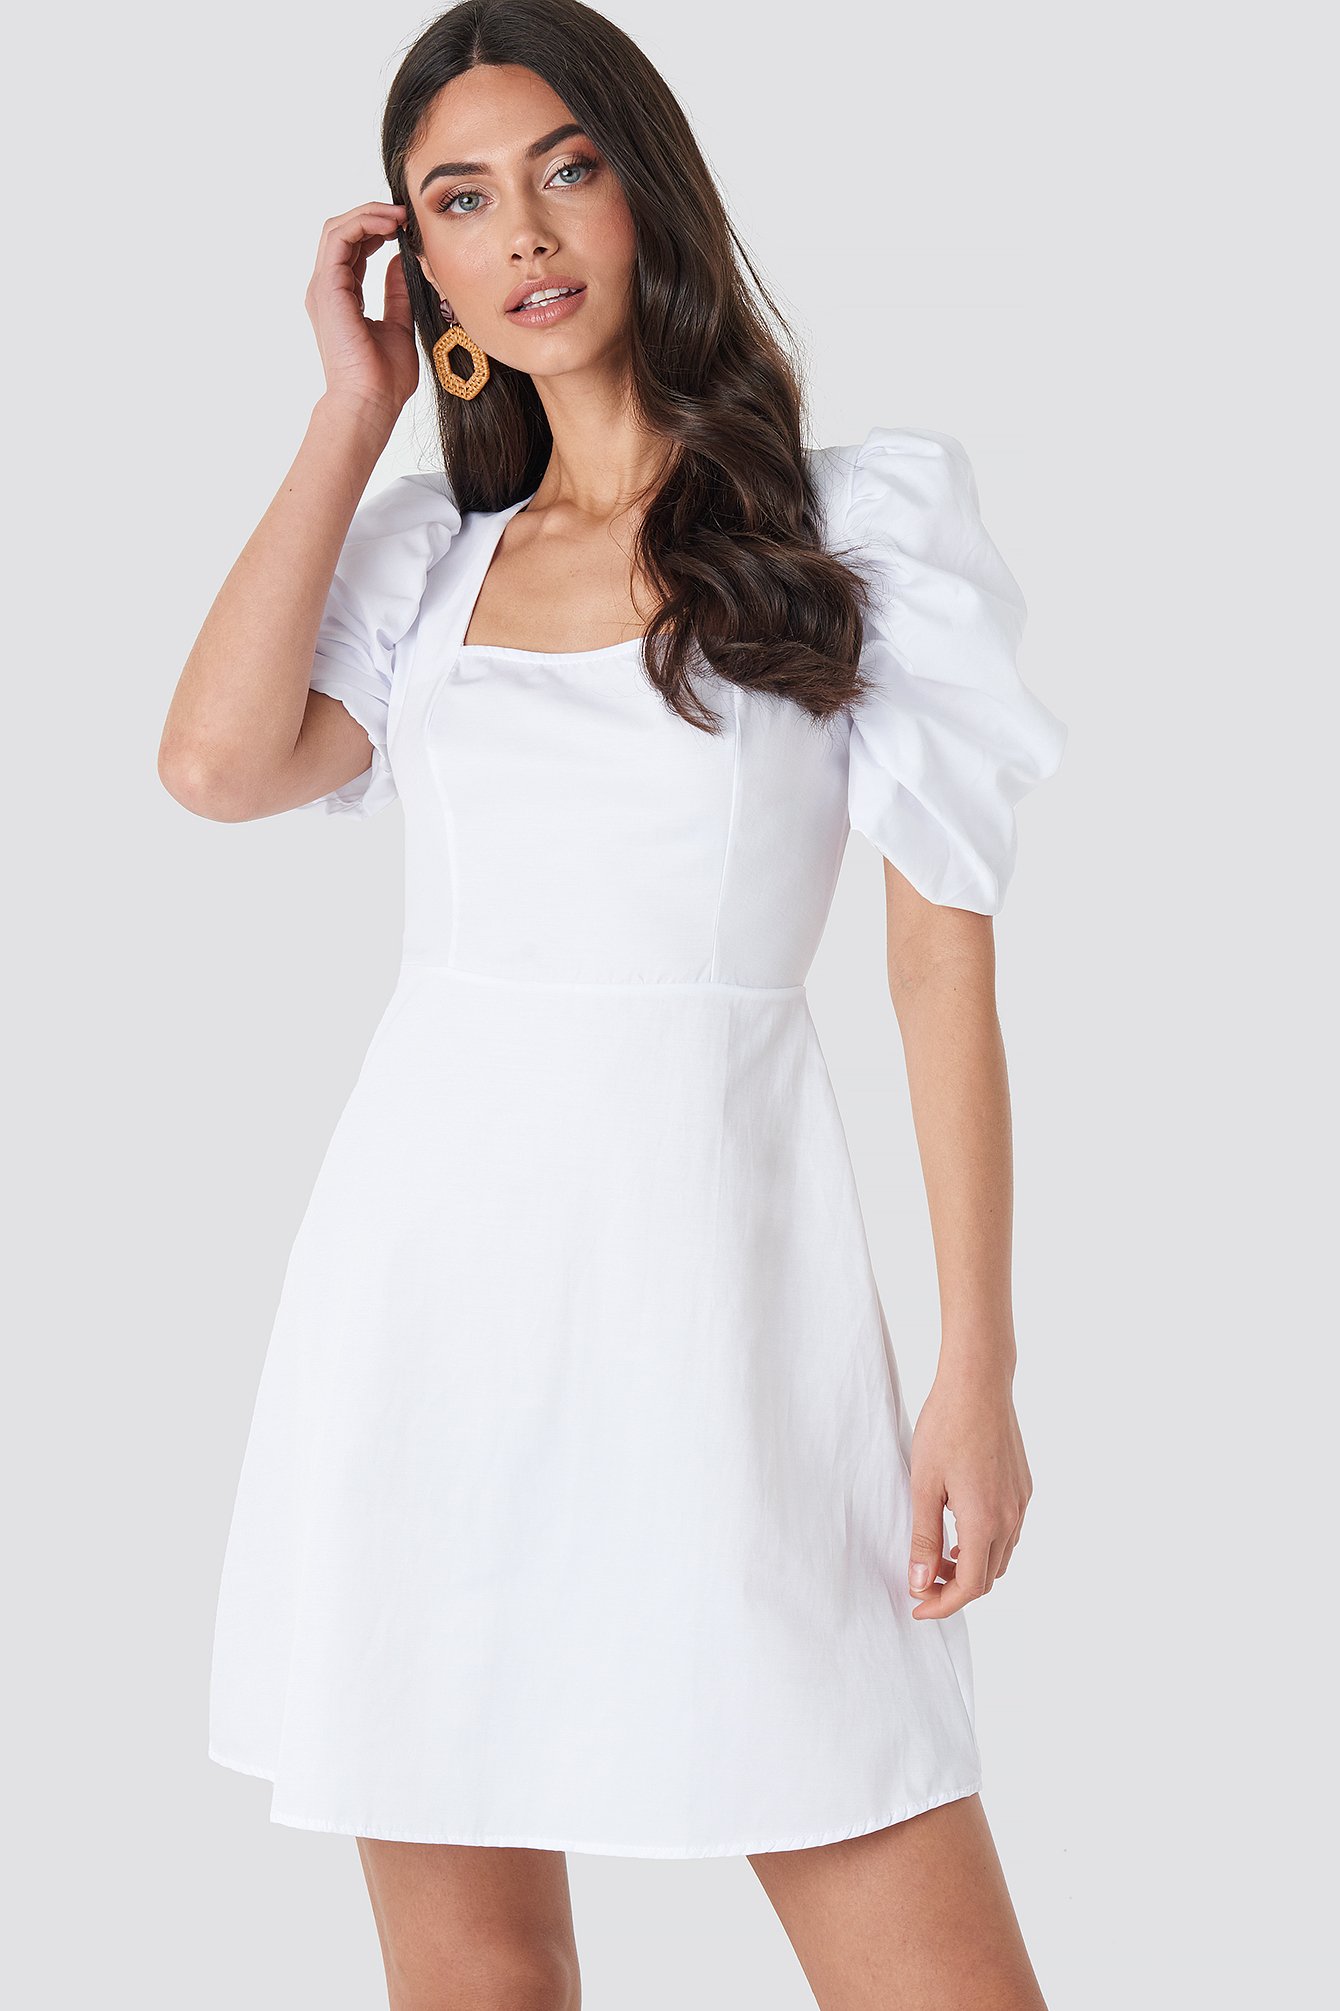 white dress puffy sleeves